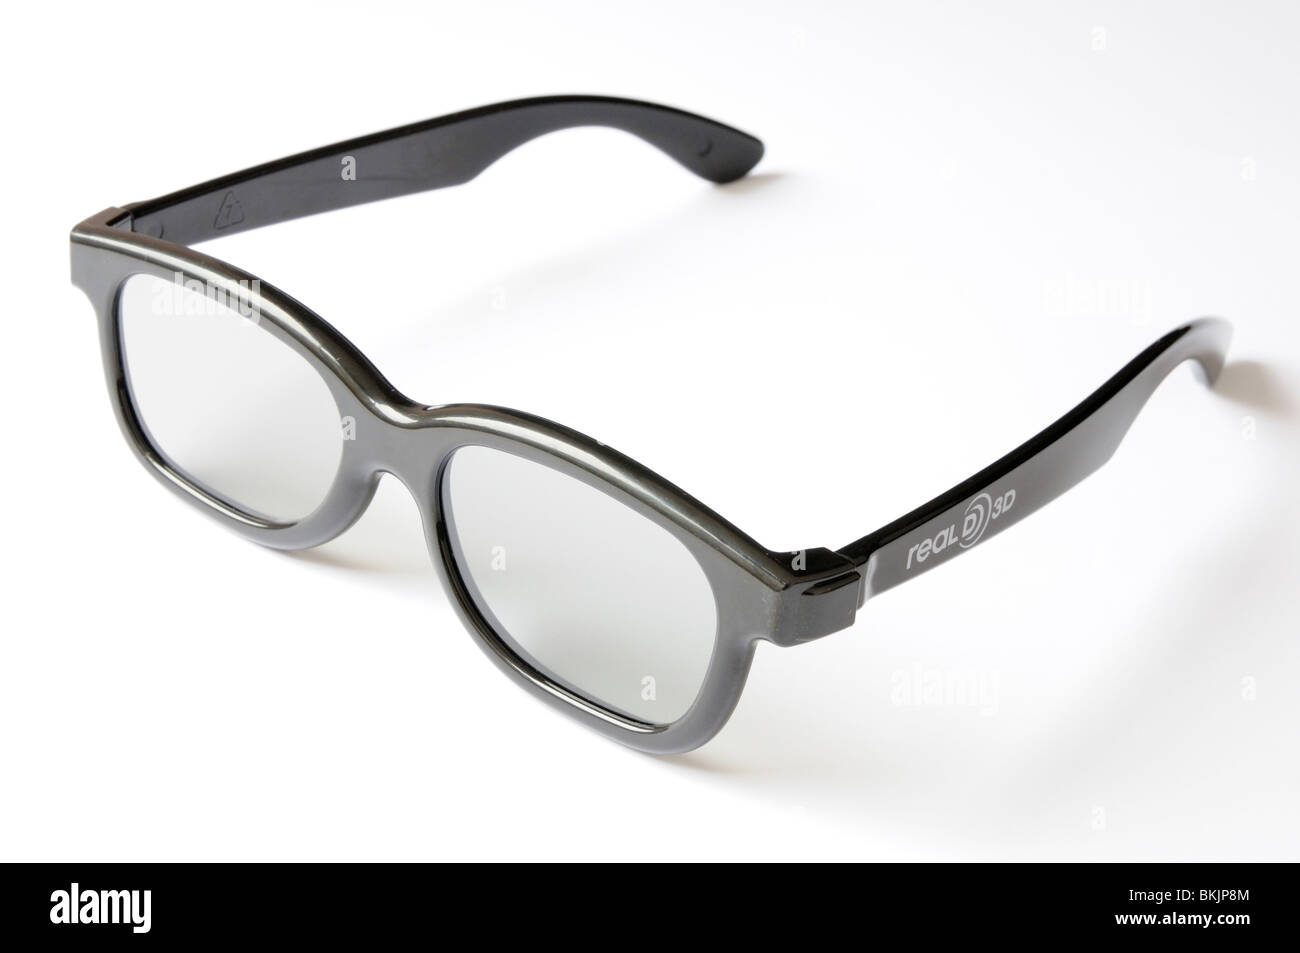 Pair of 3D cinema glasses Stock Photo